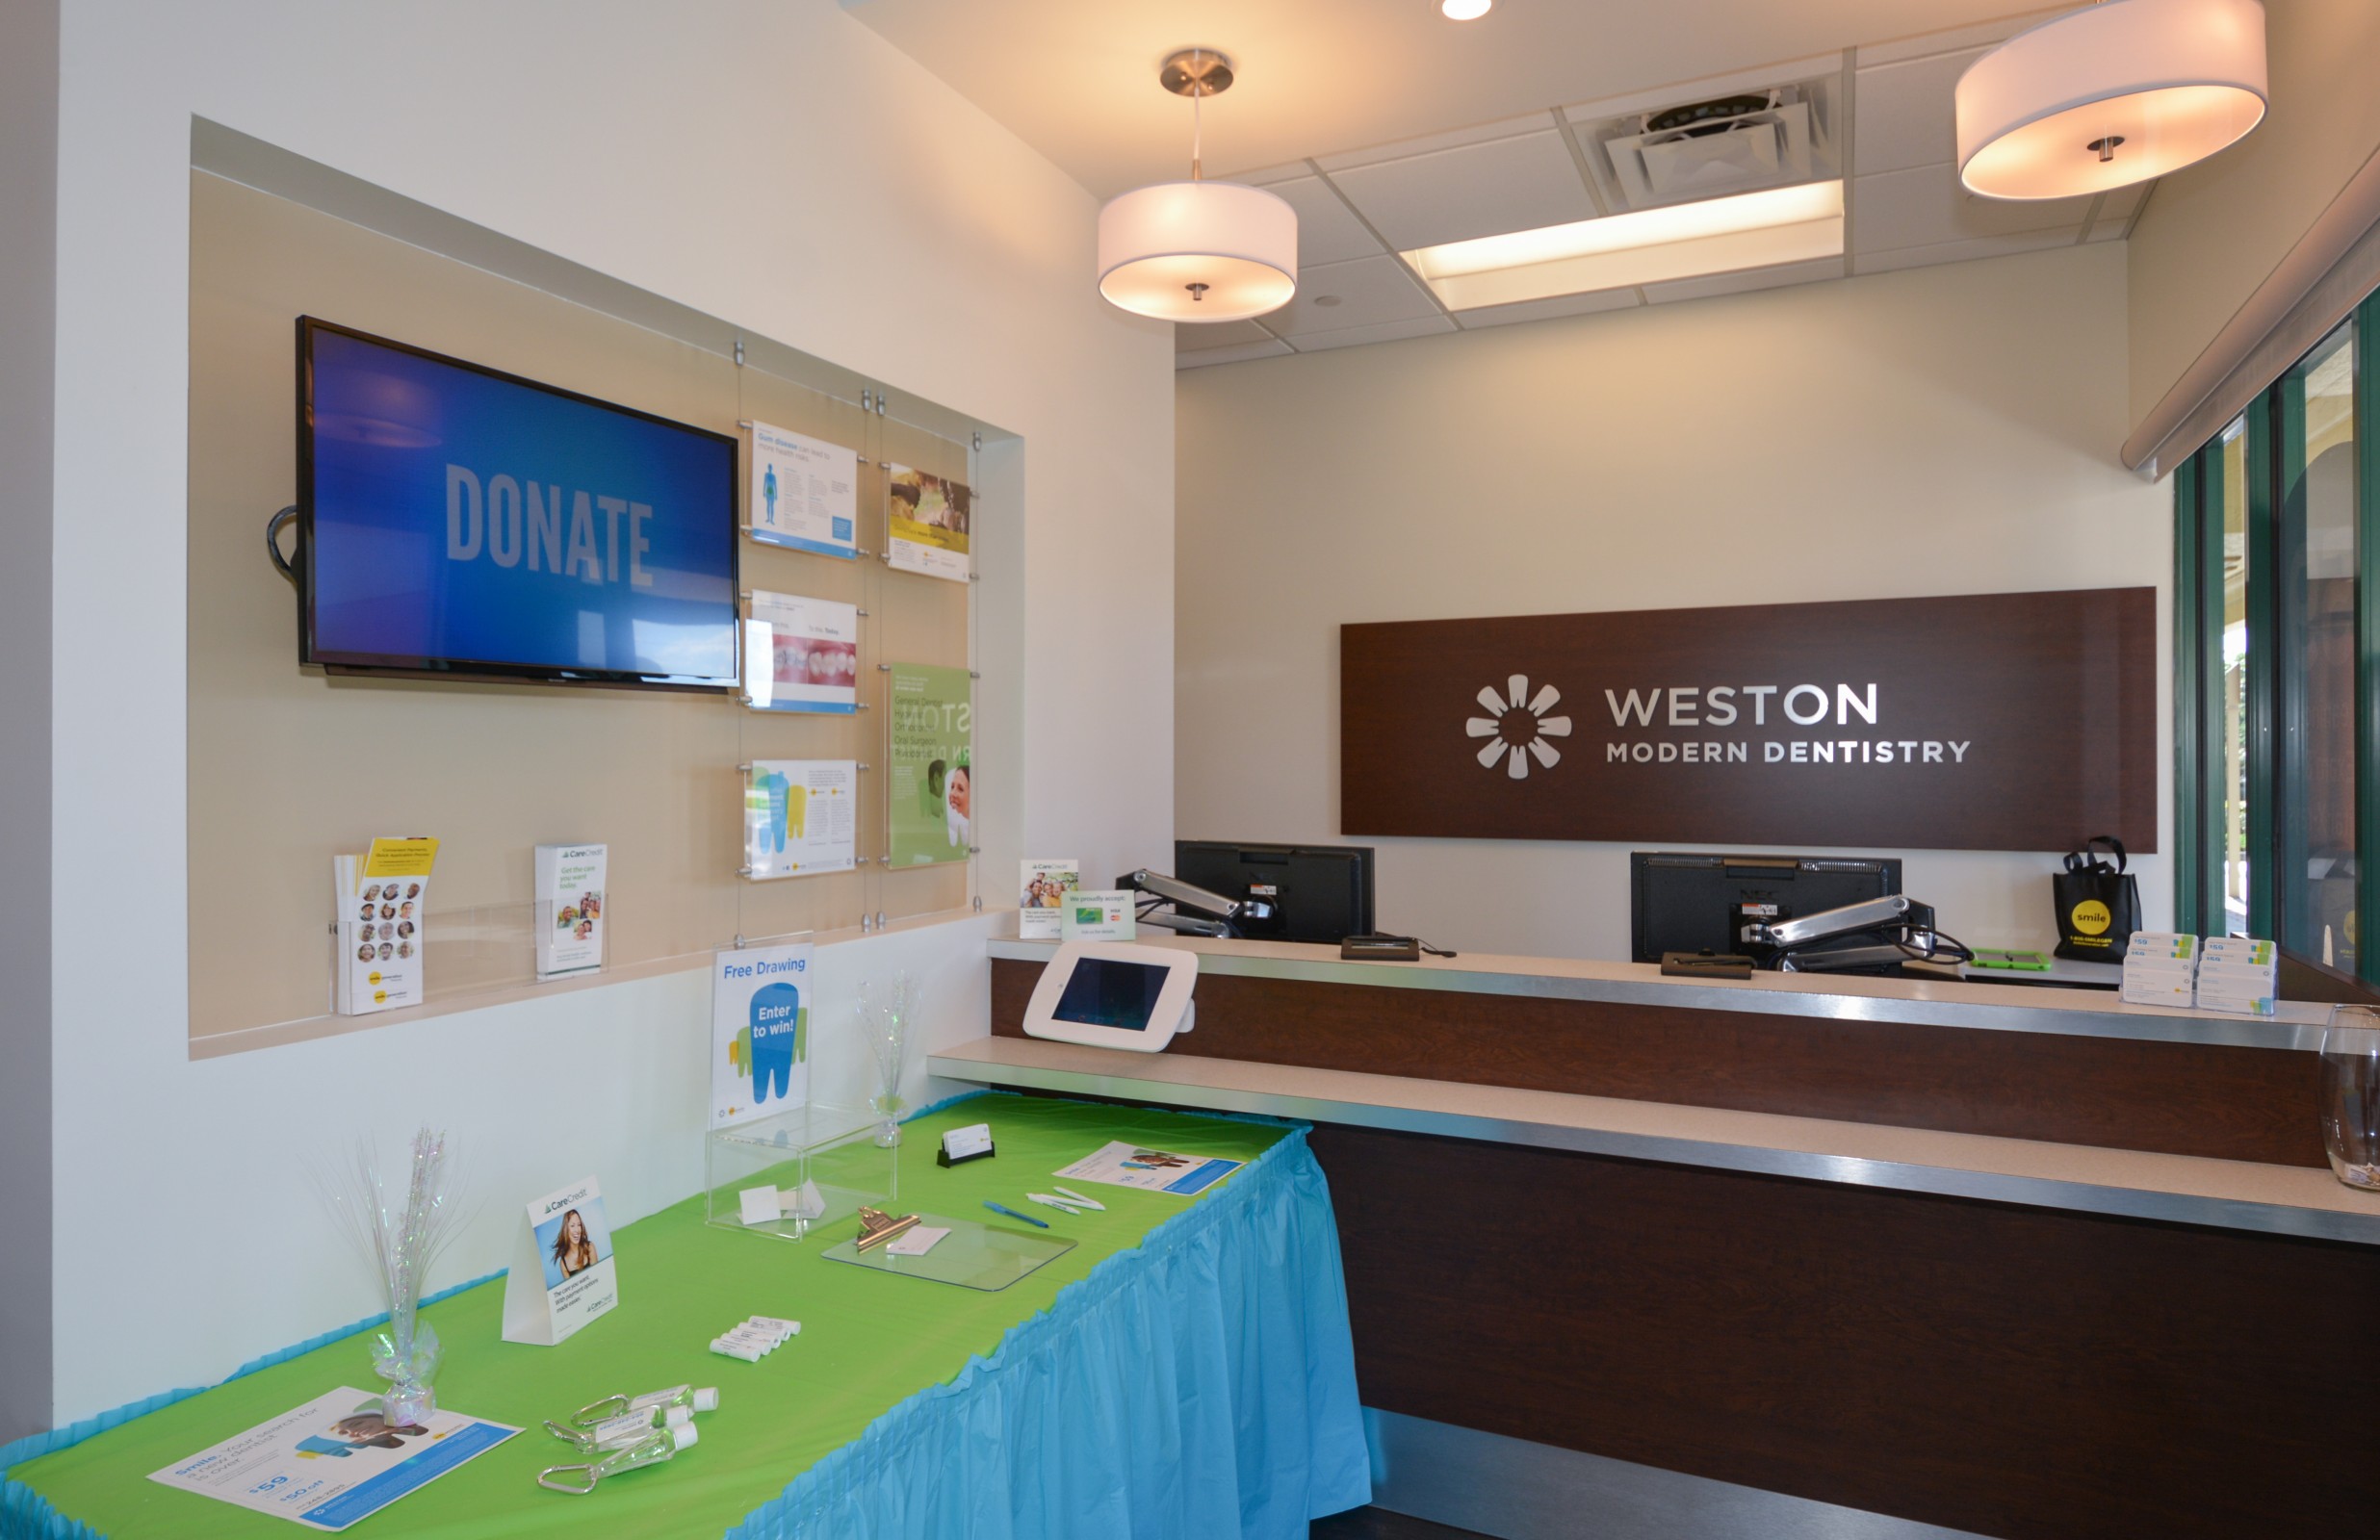 Weston Modern Dentistry opened its doors to the Weston community in September 2016. Weston Modern Dentistry Weston (954)248-2895